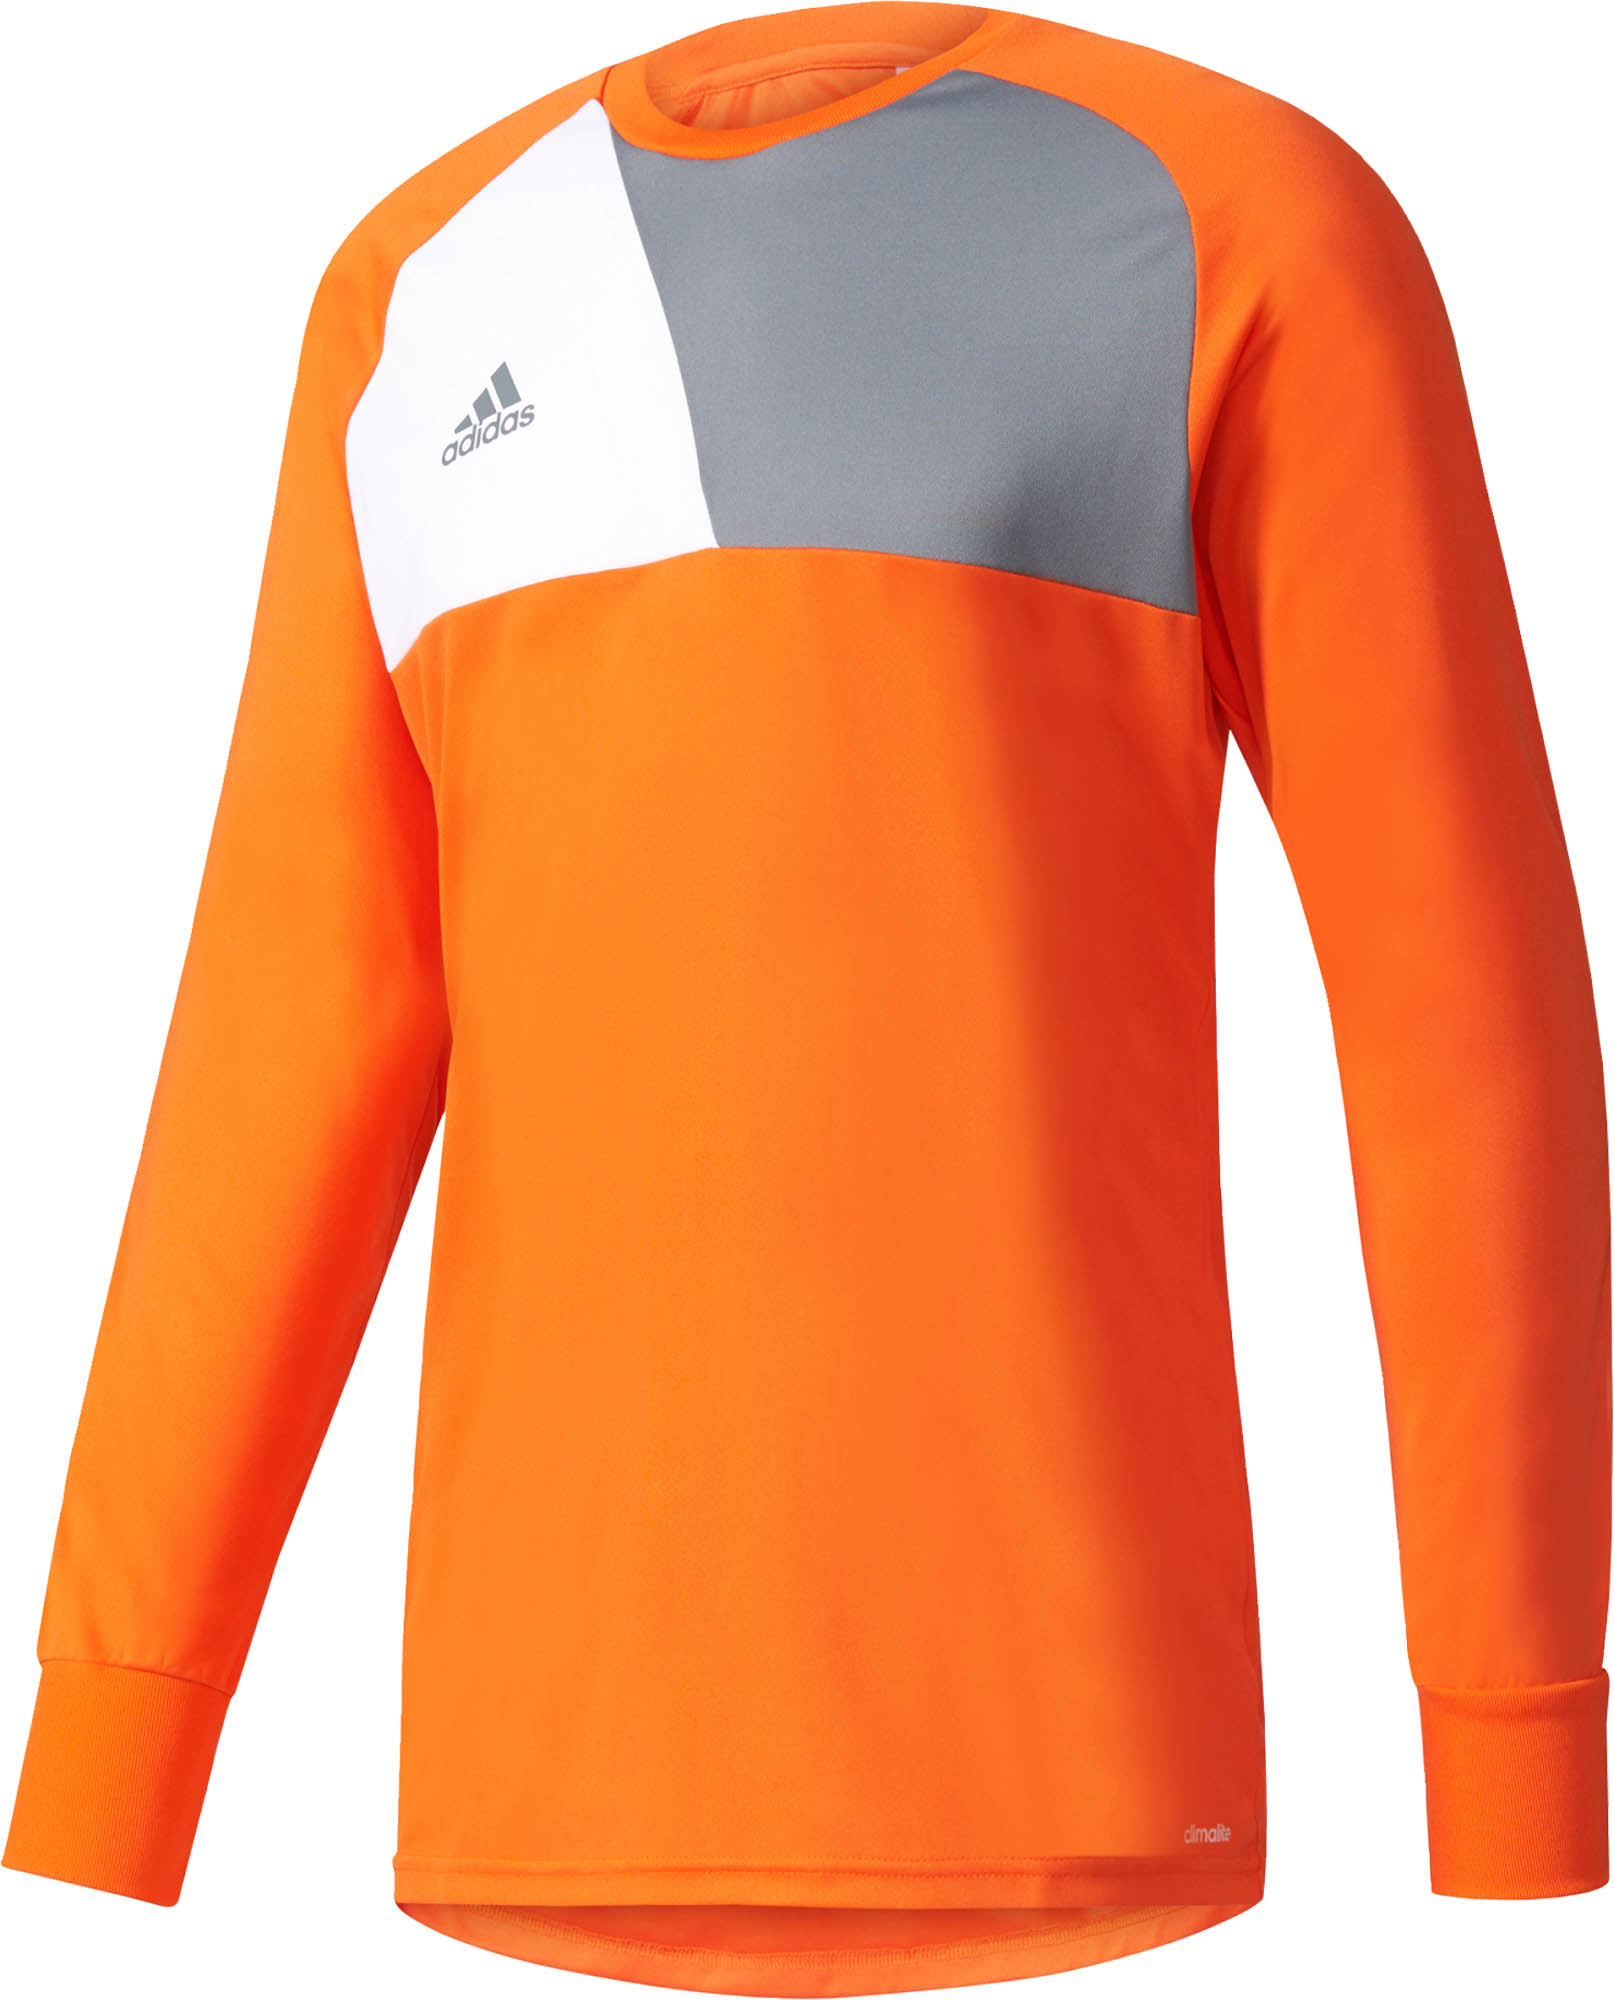 adidas orange jersey